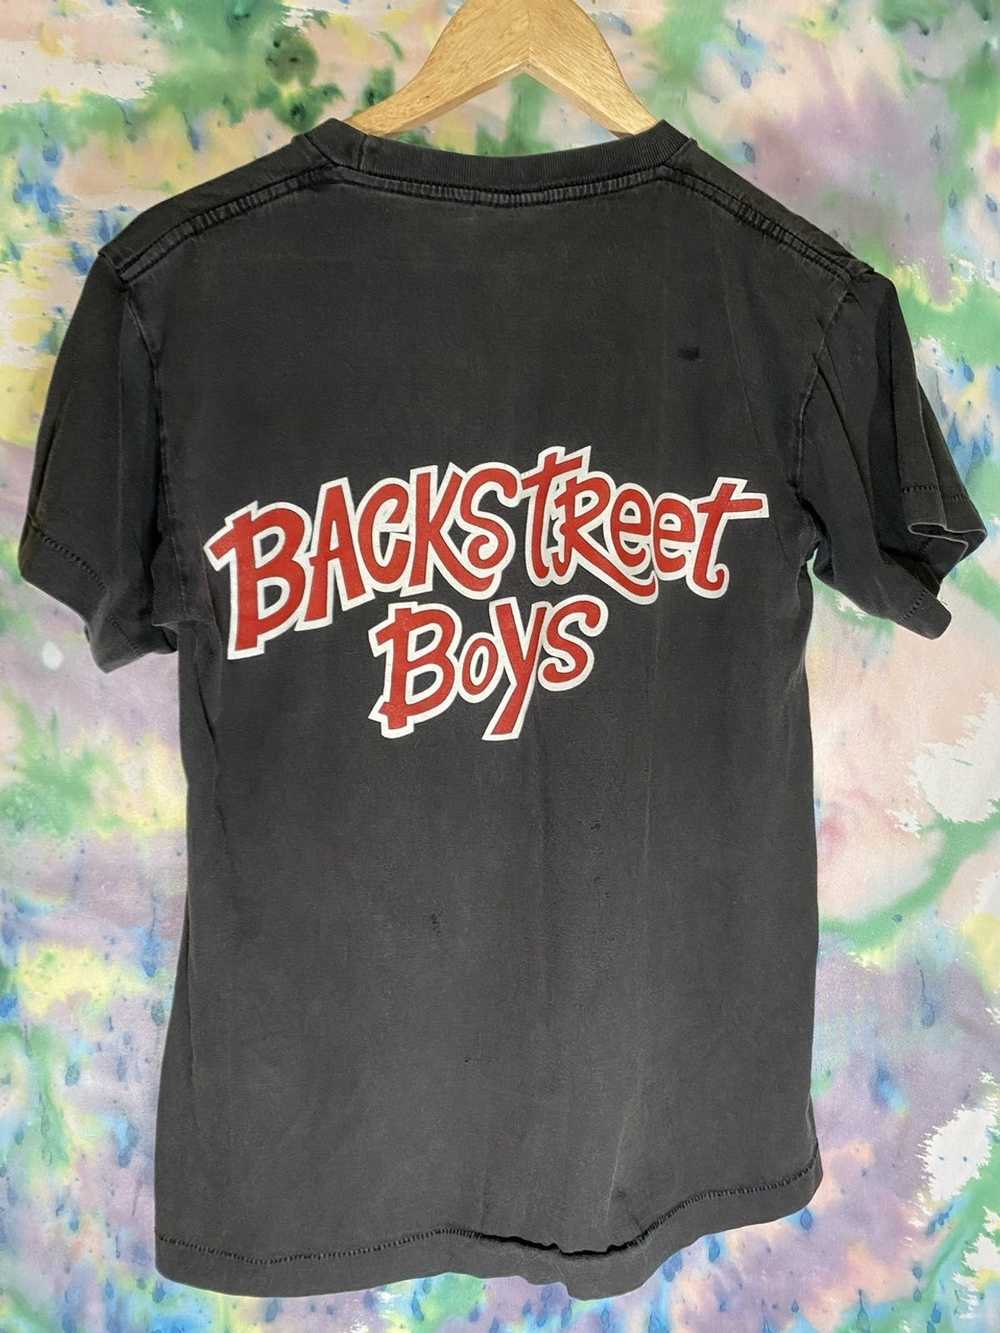 Vintage Backstreet boys Merch tee - image 2